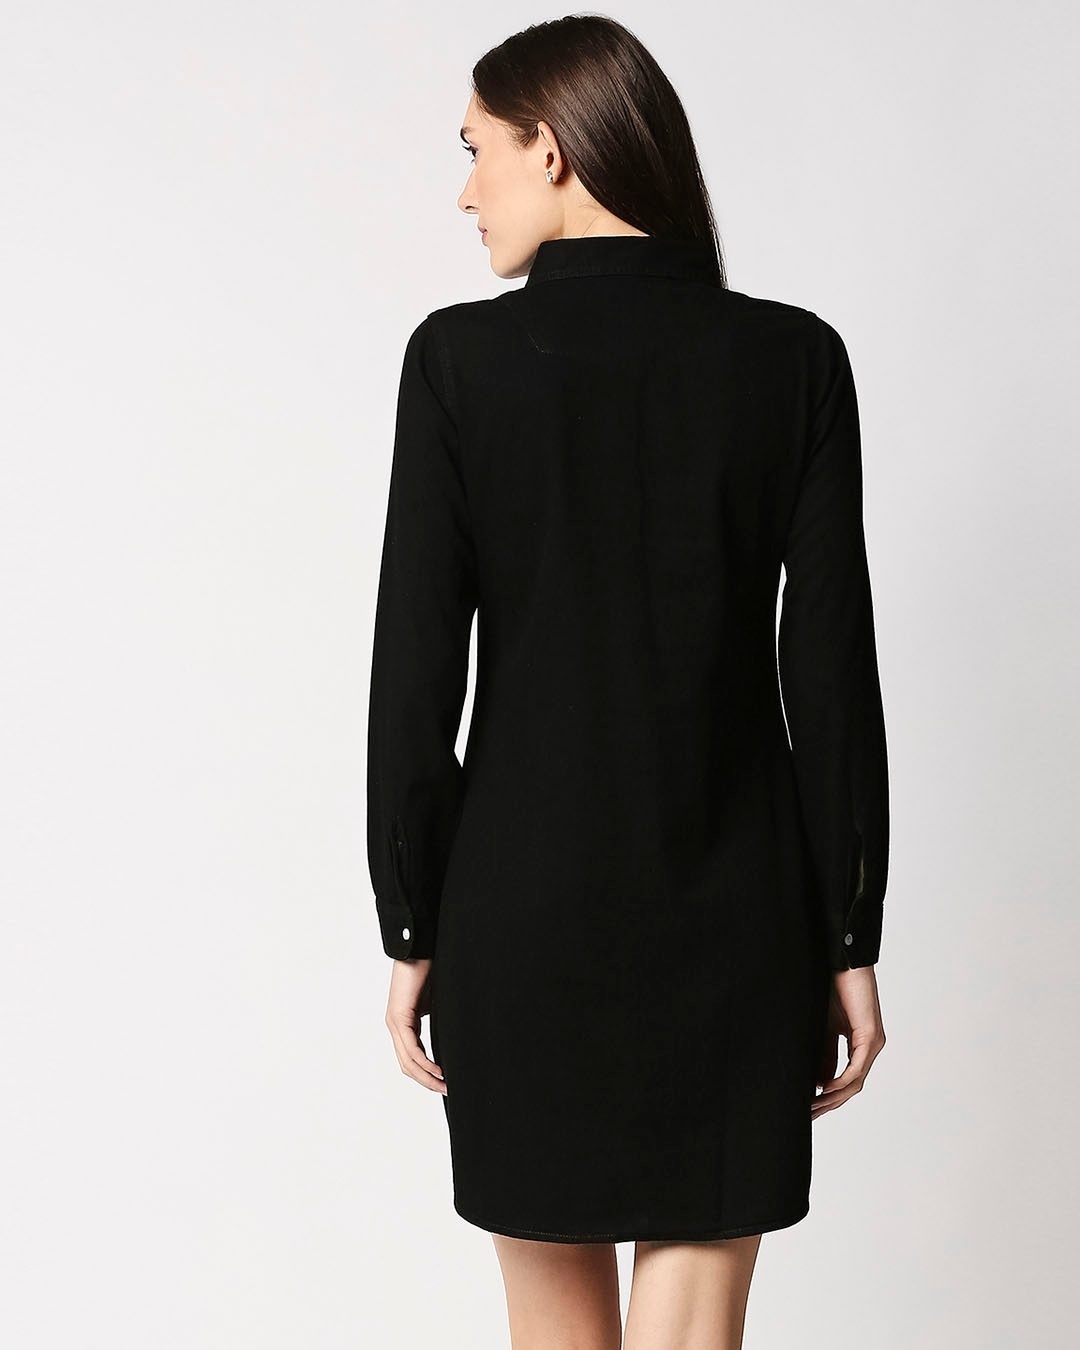 Shop Women's Black Solid Shirt Dress-Design